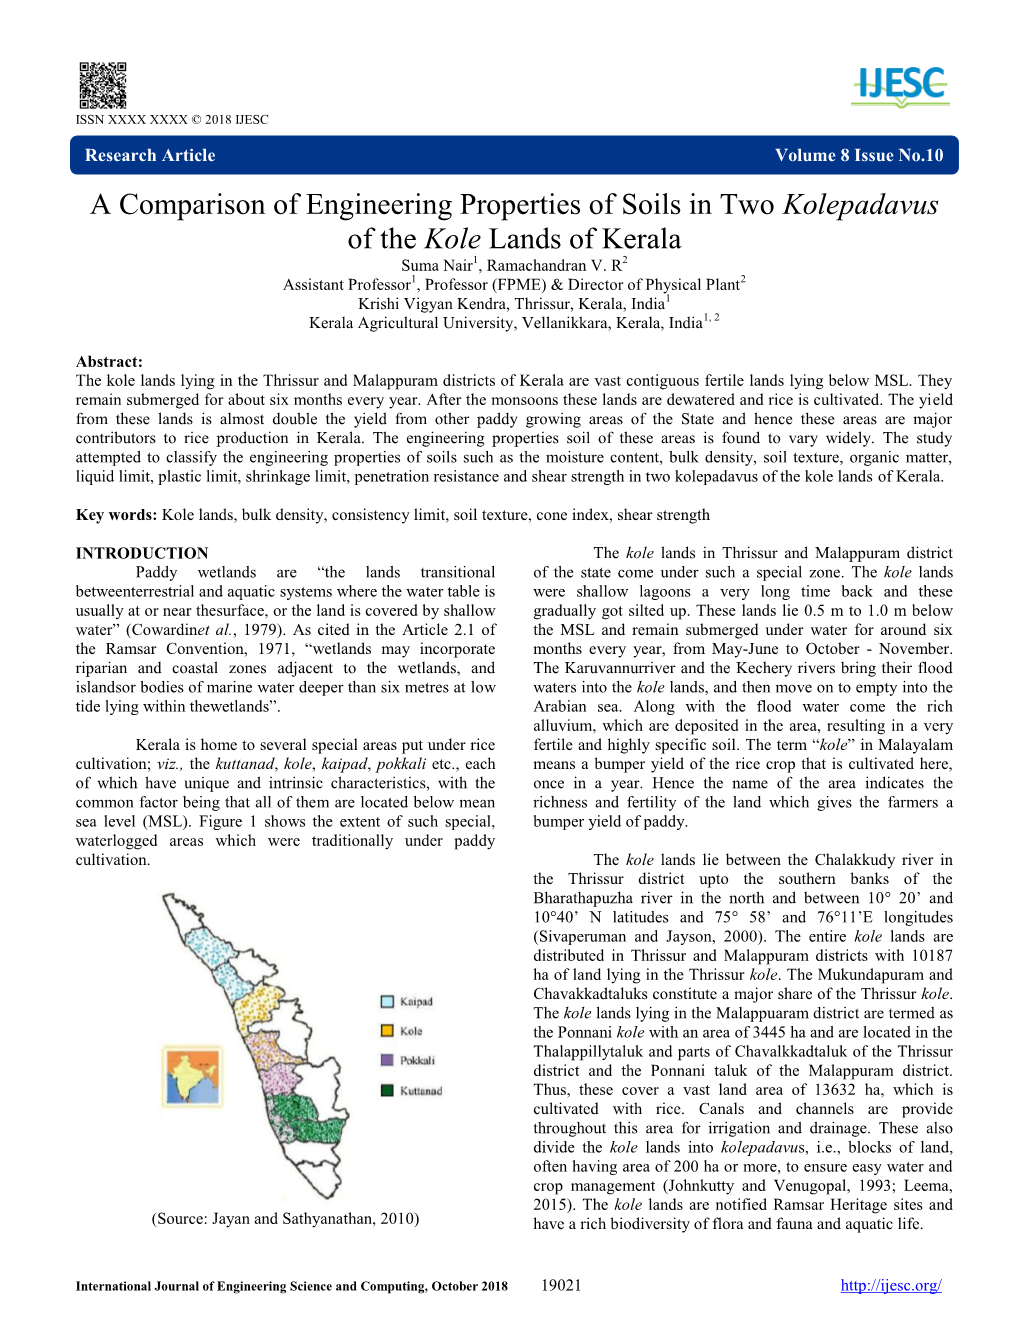 A Comparison of Engineering Properties of Soils in Two Kolepadavus of the Kole Lands of Kerala Suma Nair1, Ramachandran V